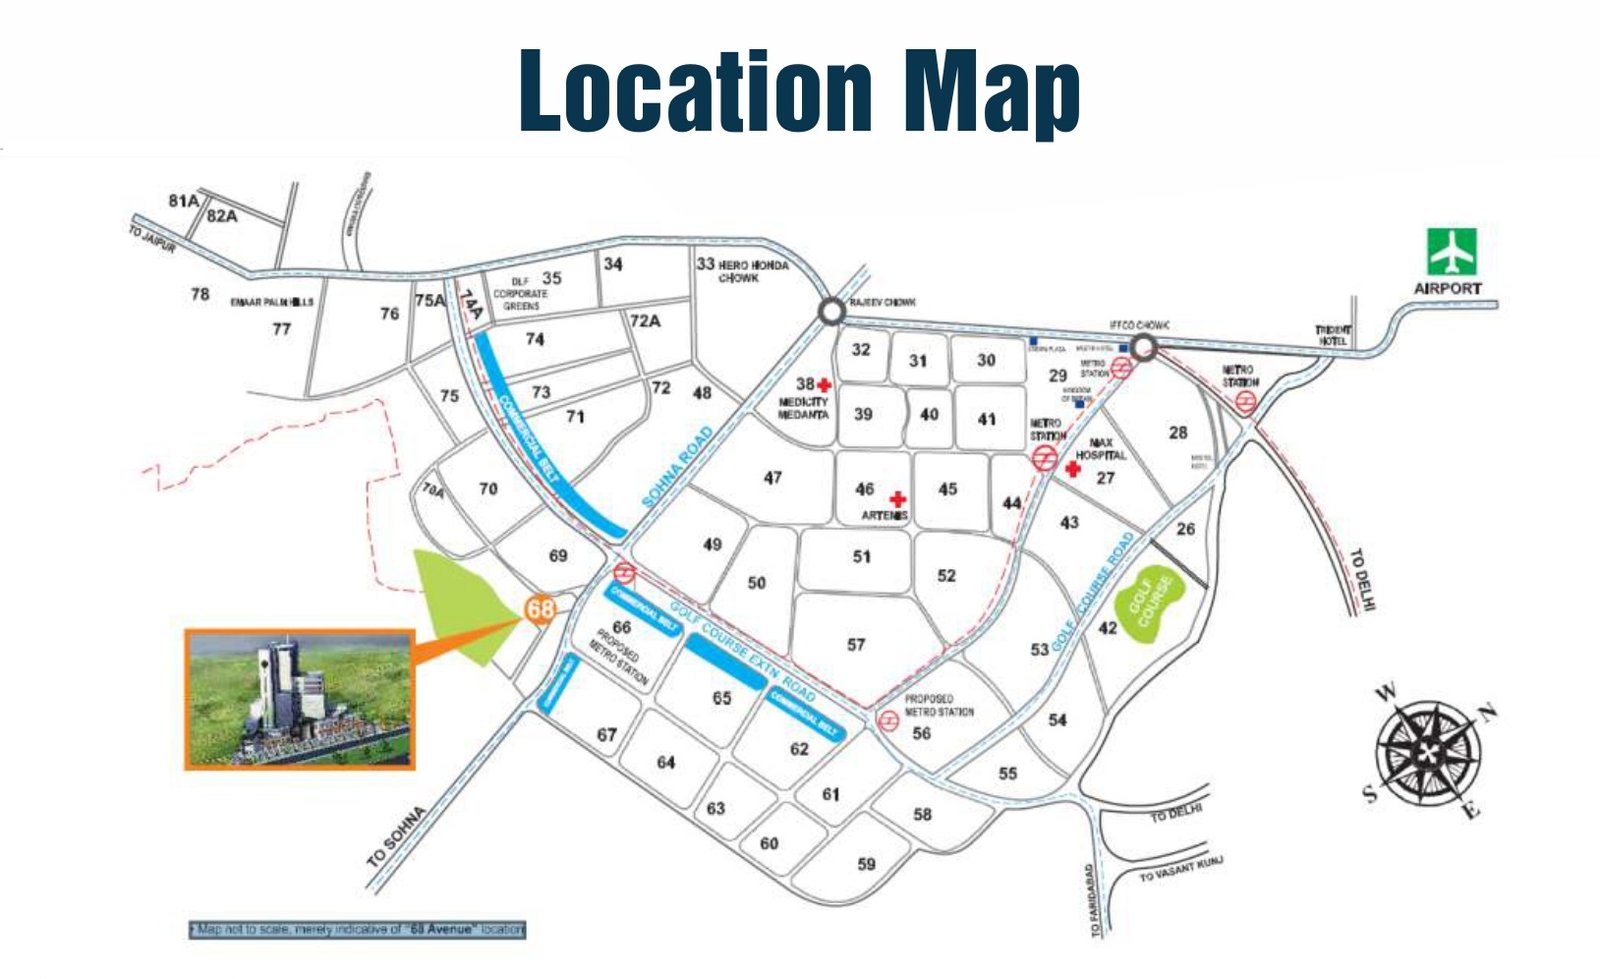 VSR 68 Avenue Location Map